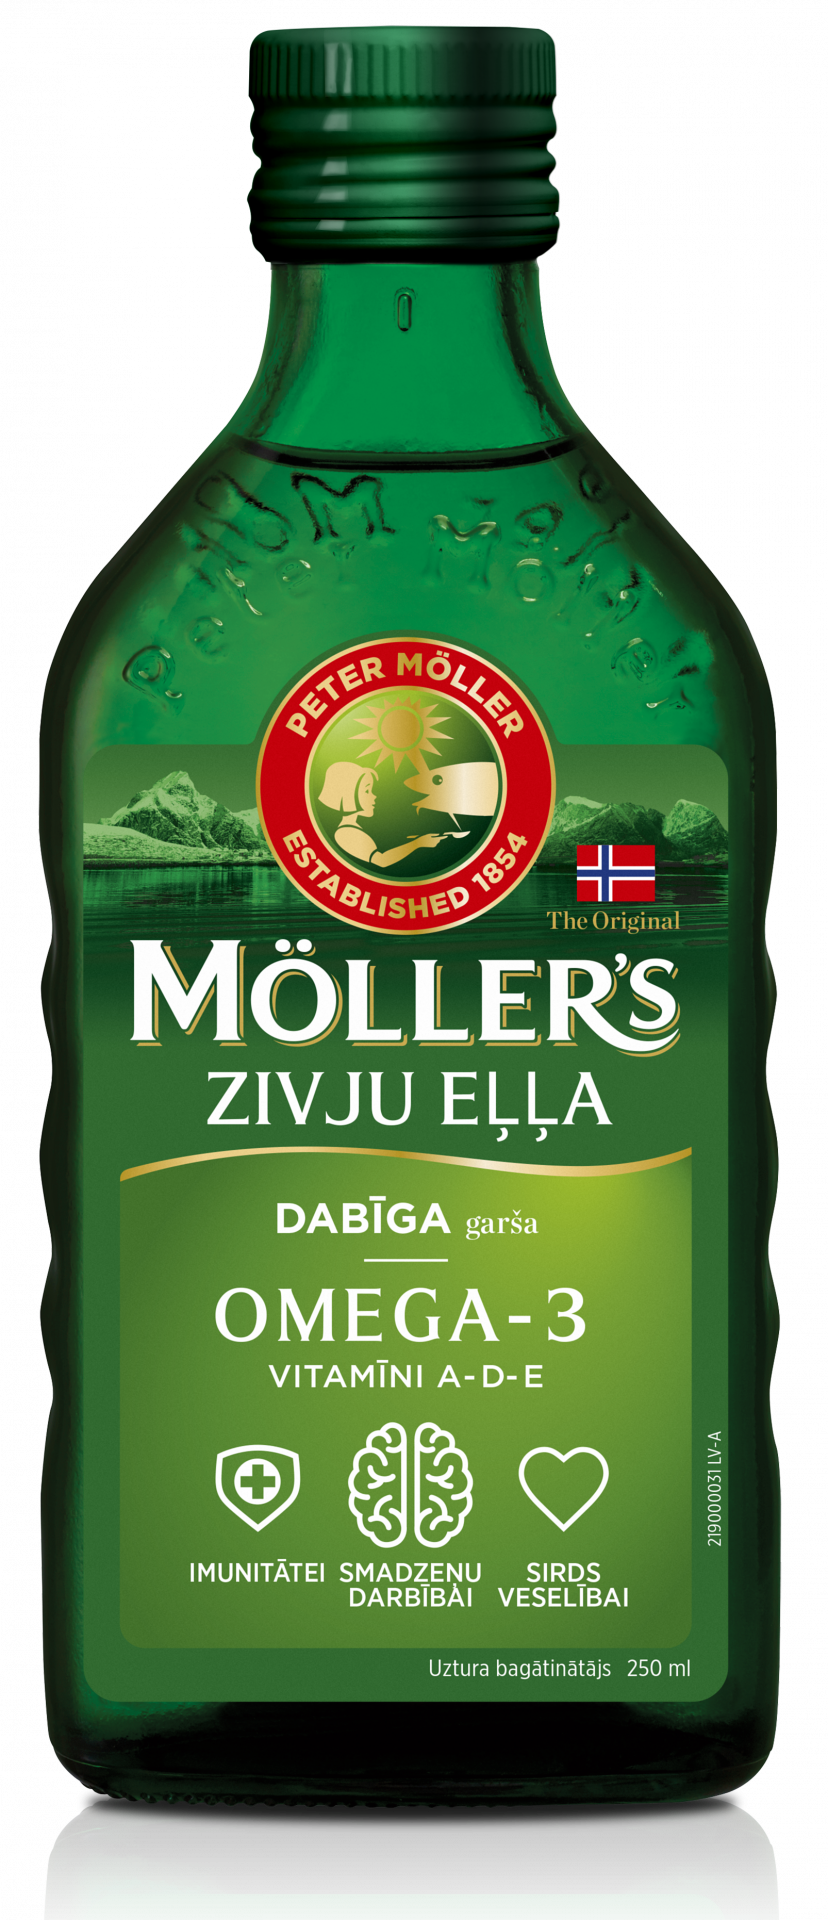 MOLLERS zivju eļļa (dabīga garša), 250 ml